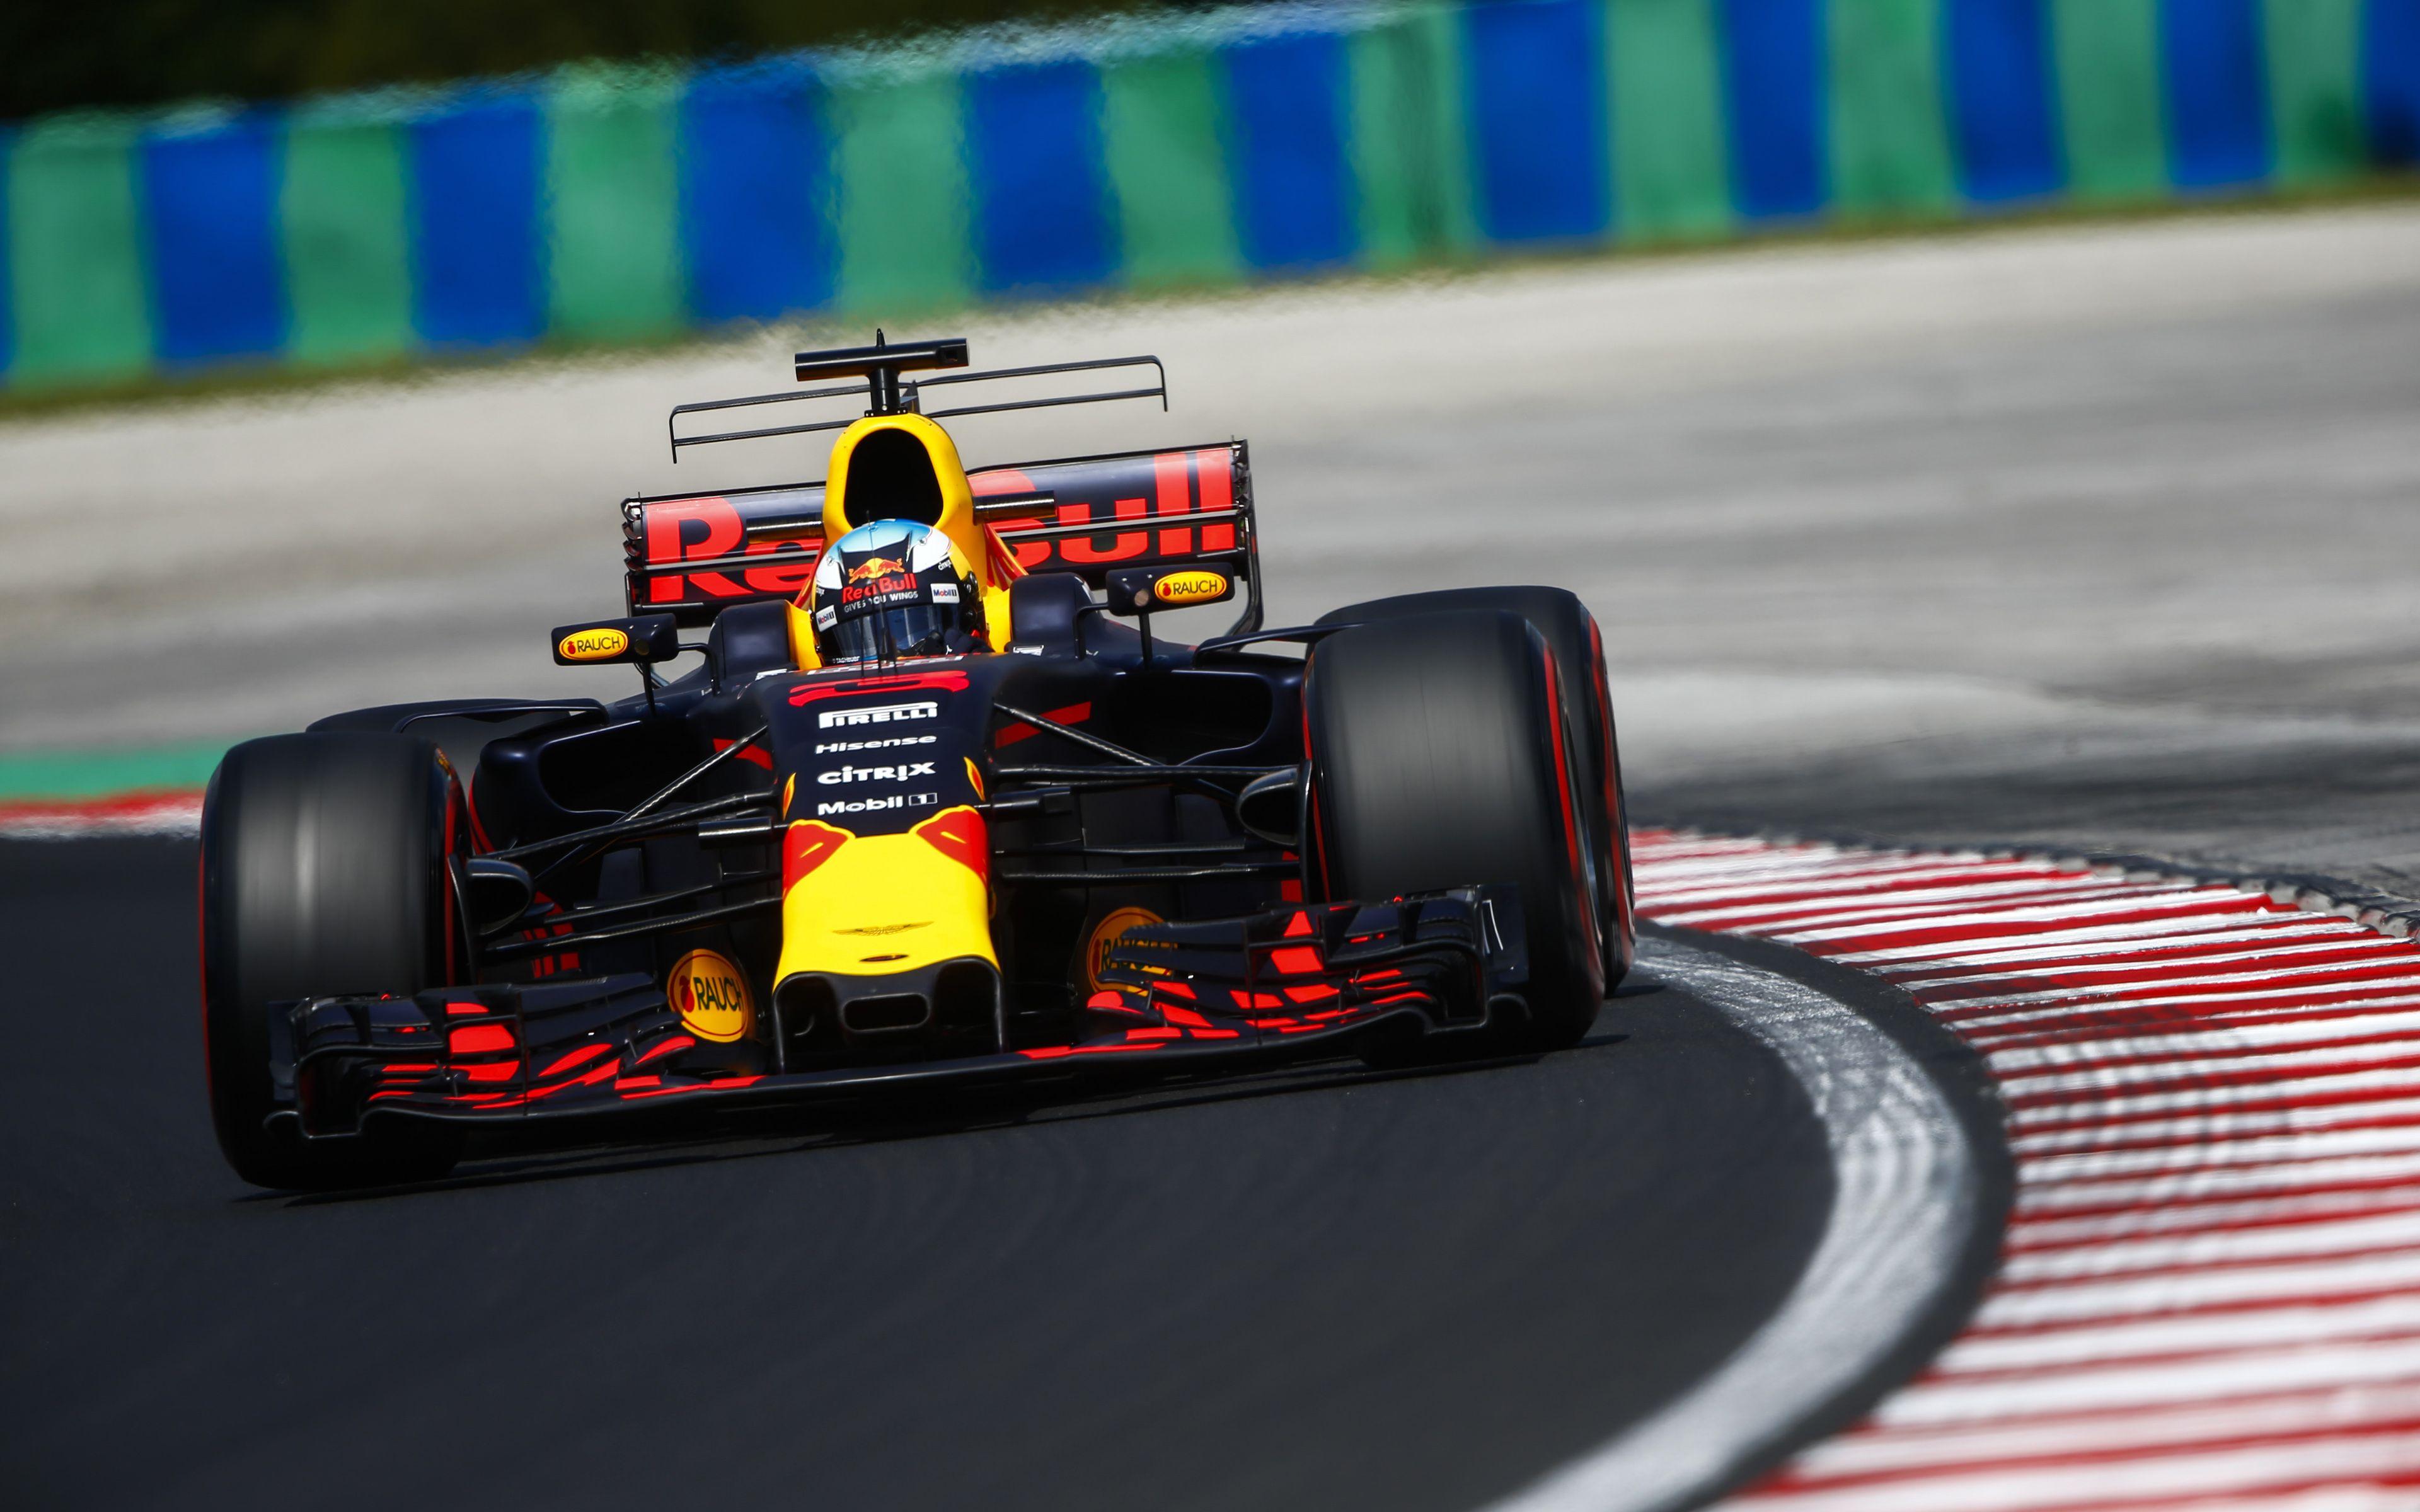 Download wallpaper 4k, Daniel Ricciardo, Formula One, F Red Bull